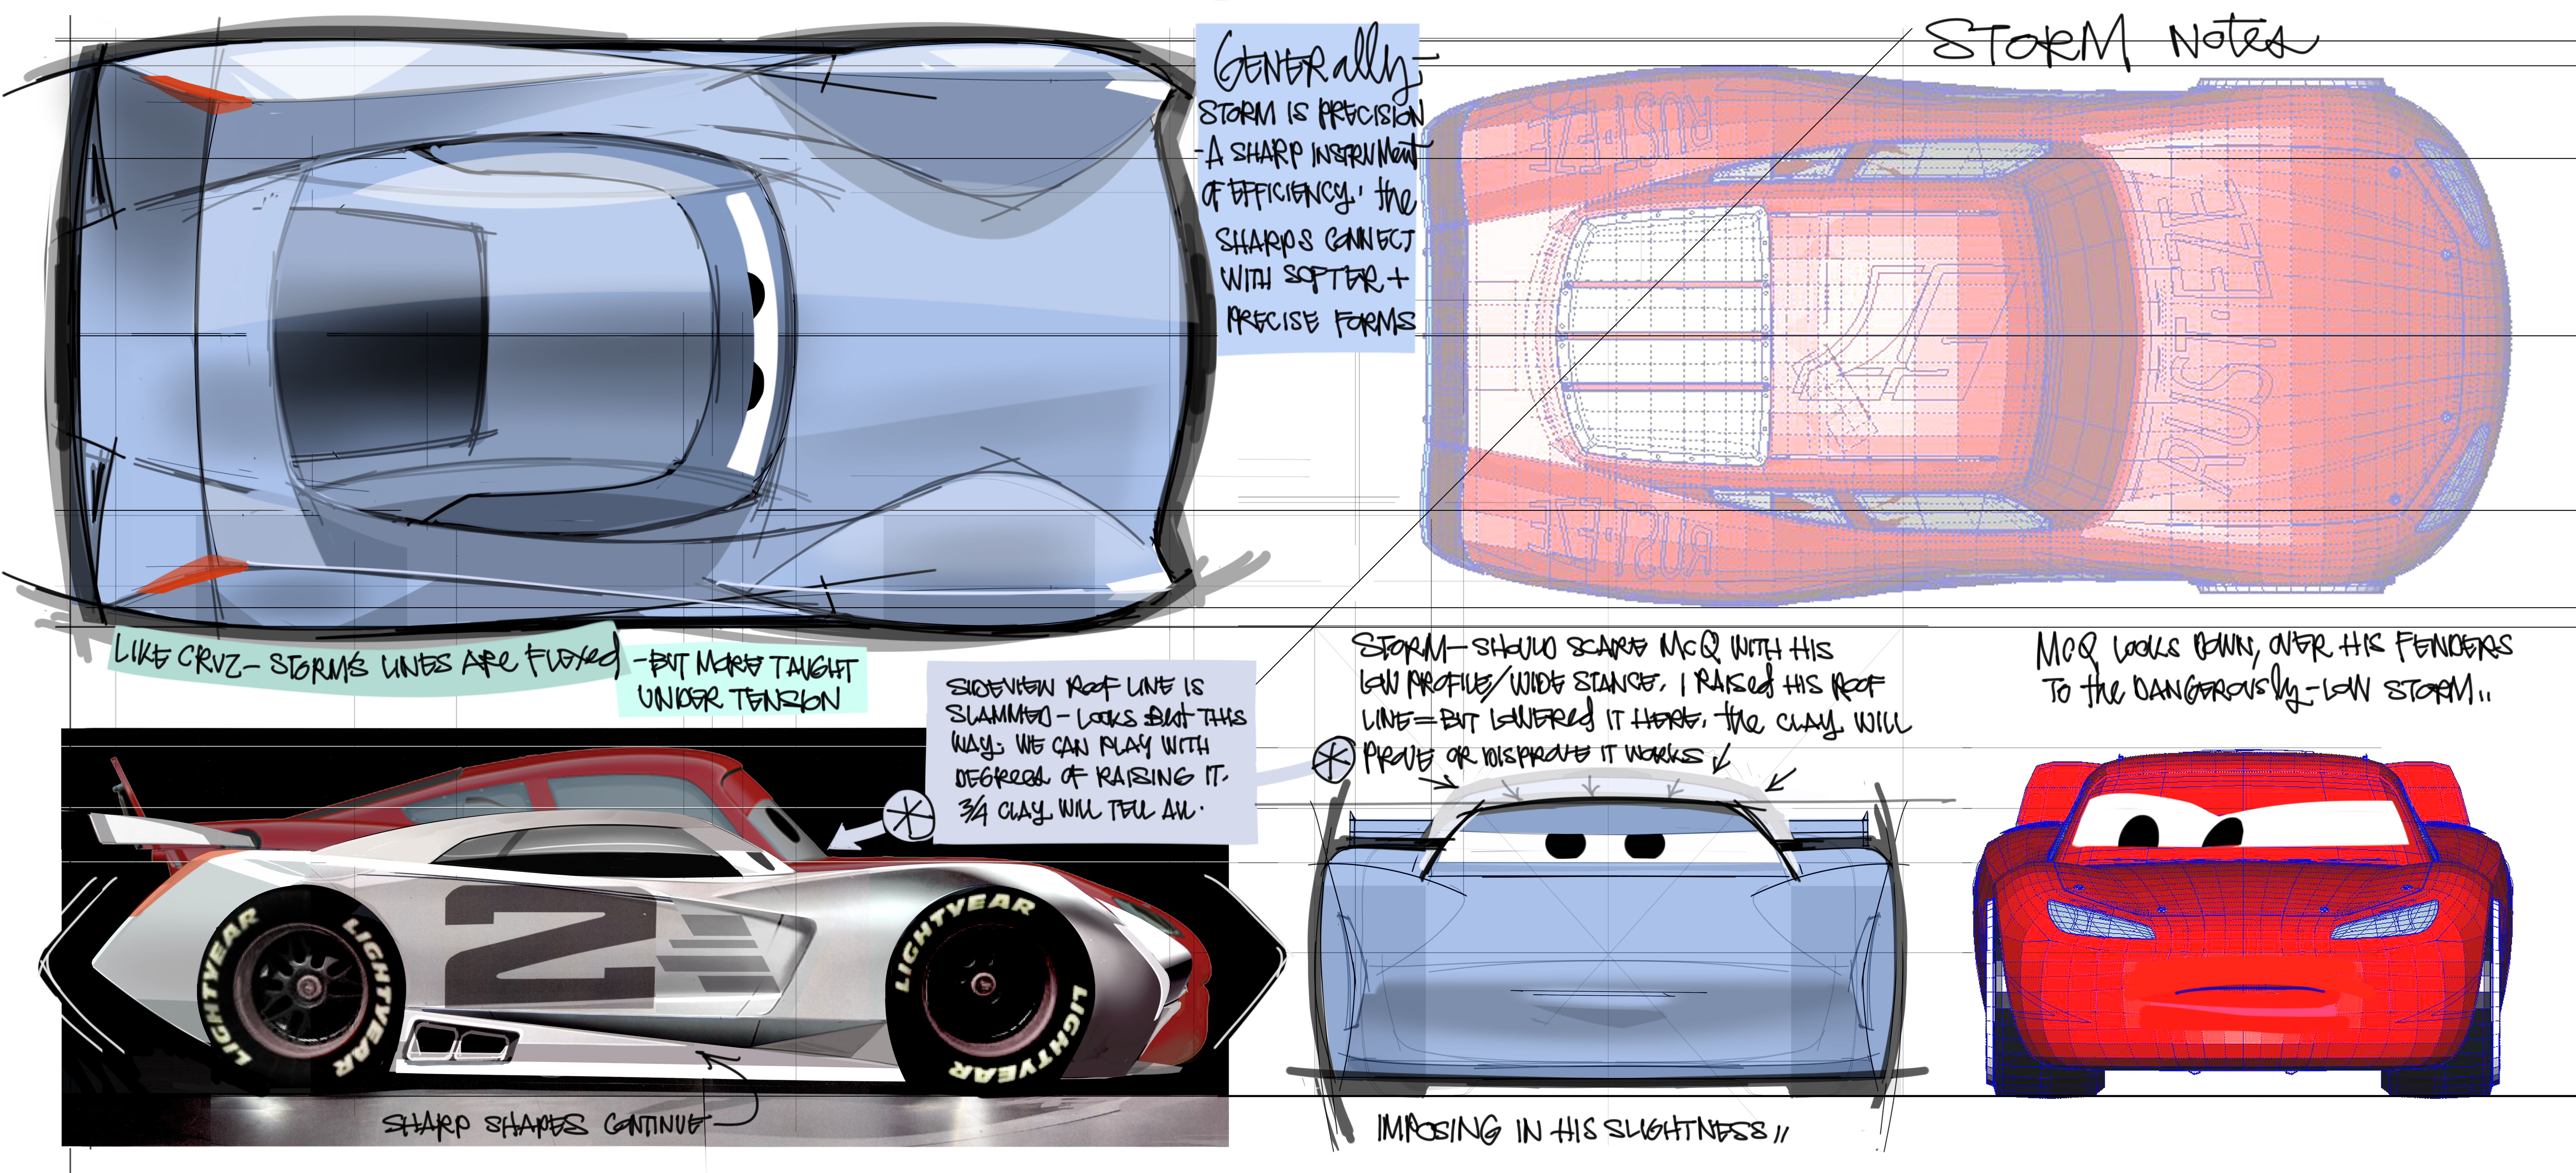 CARS 3 (Pictured) - Concept art for Jackson Storm by Production Designer Jay Shuster. Â©2017 Disneyâ¢Pixar. All Rights Reserved.